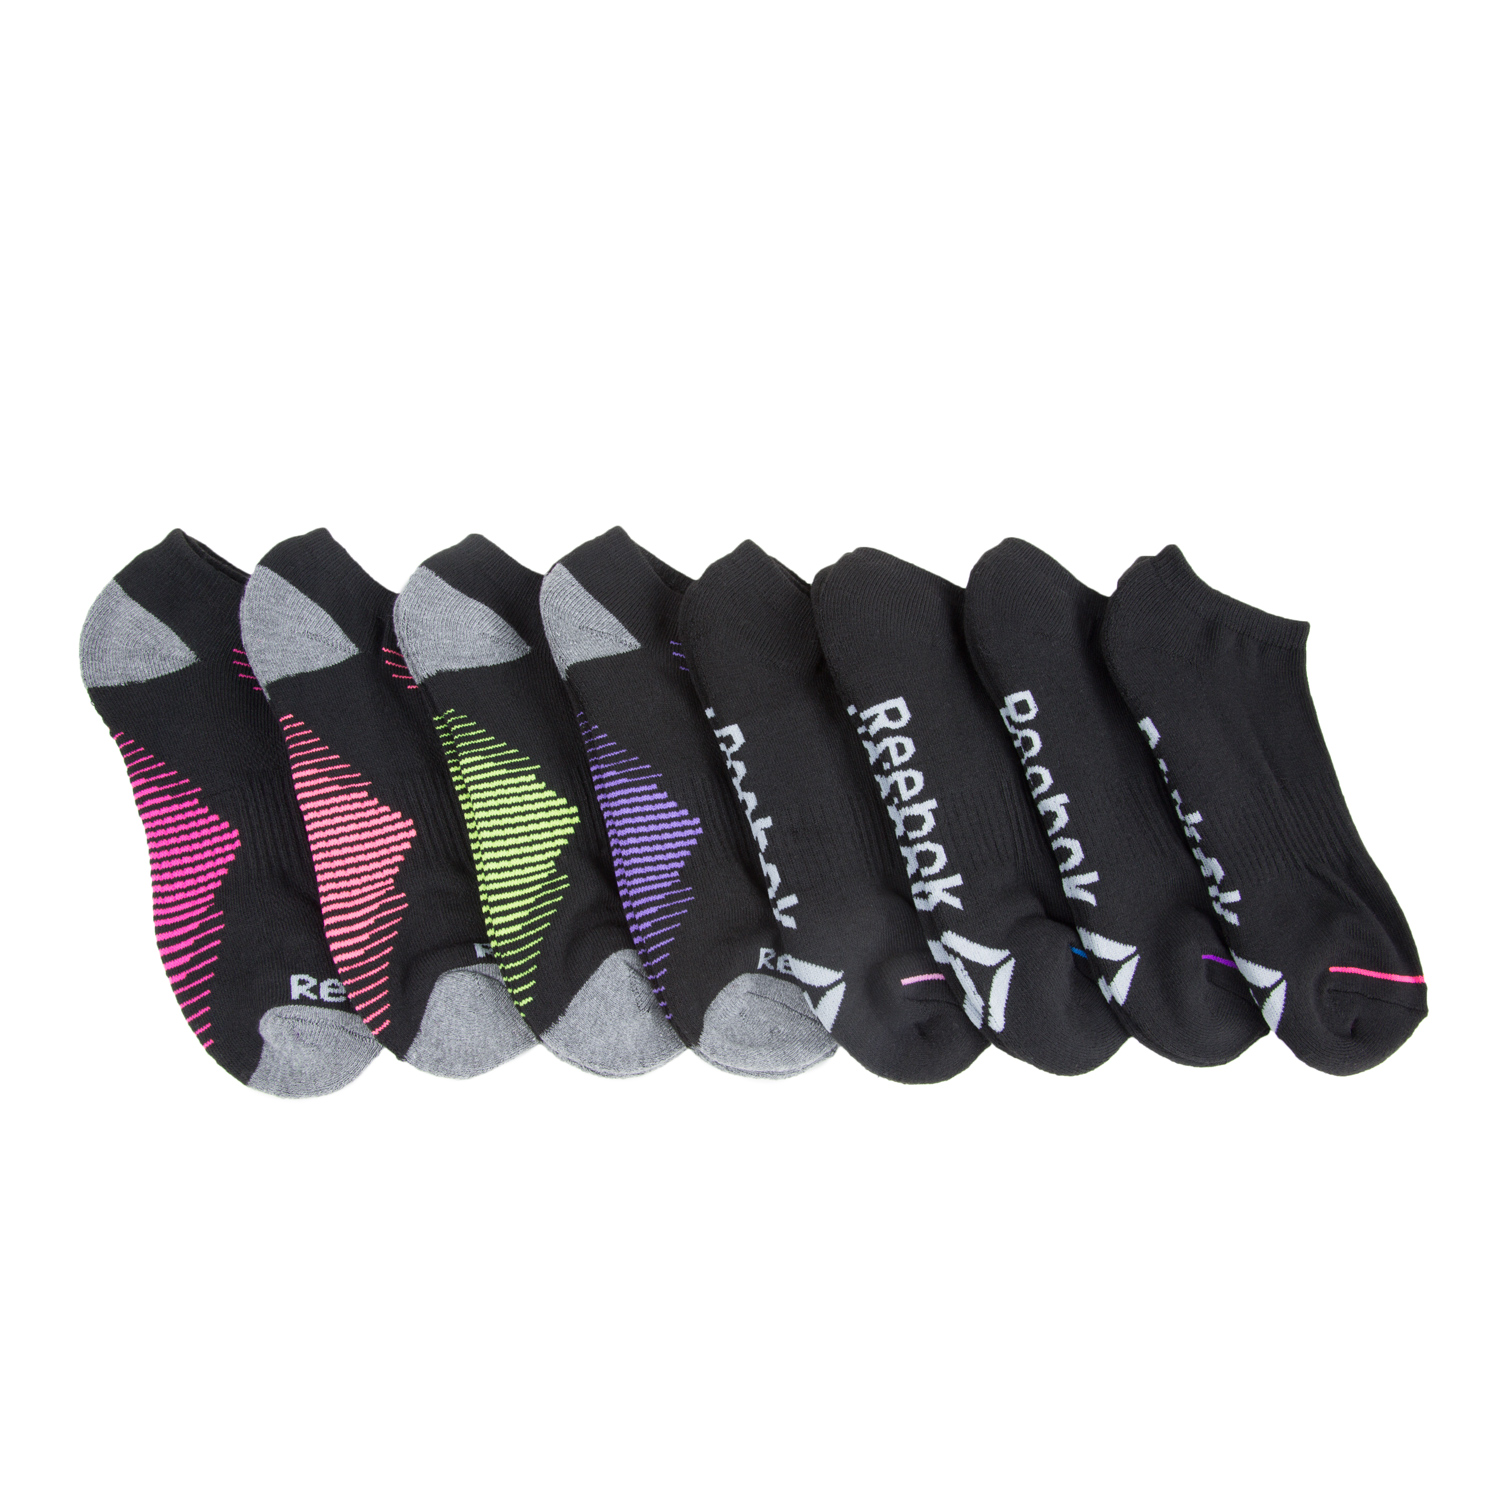 Details about   New Trimfit Cotton Blend Soccer Socks Black 24" Shoe Size 4-10 